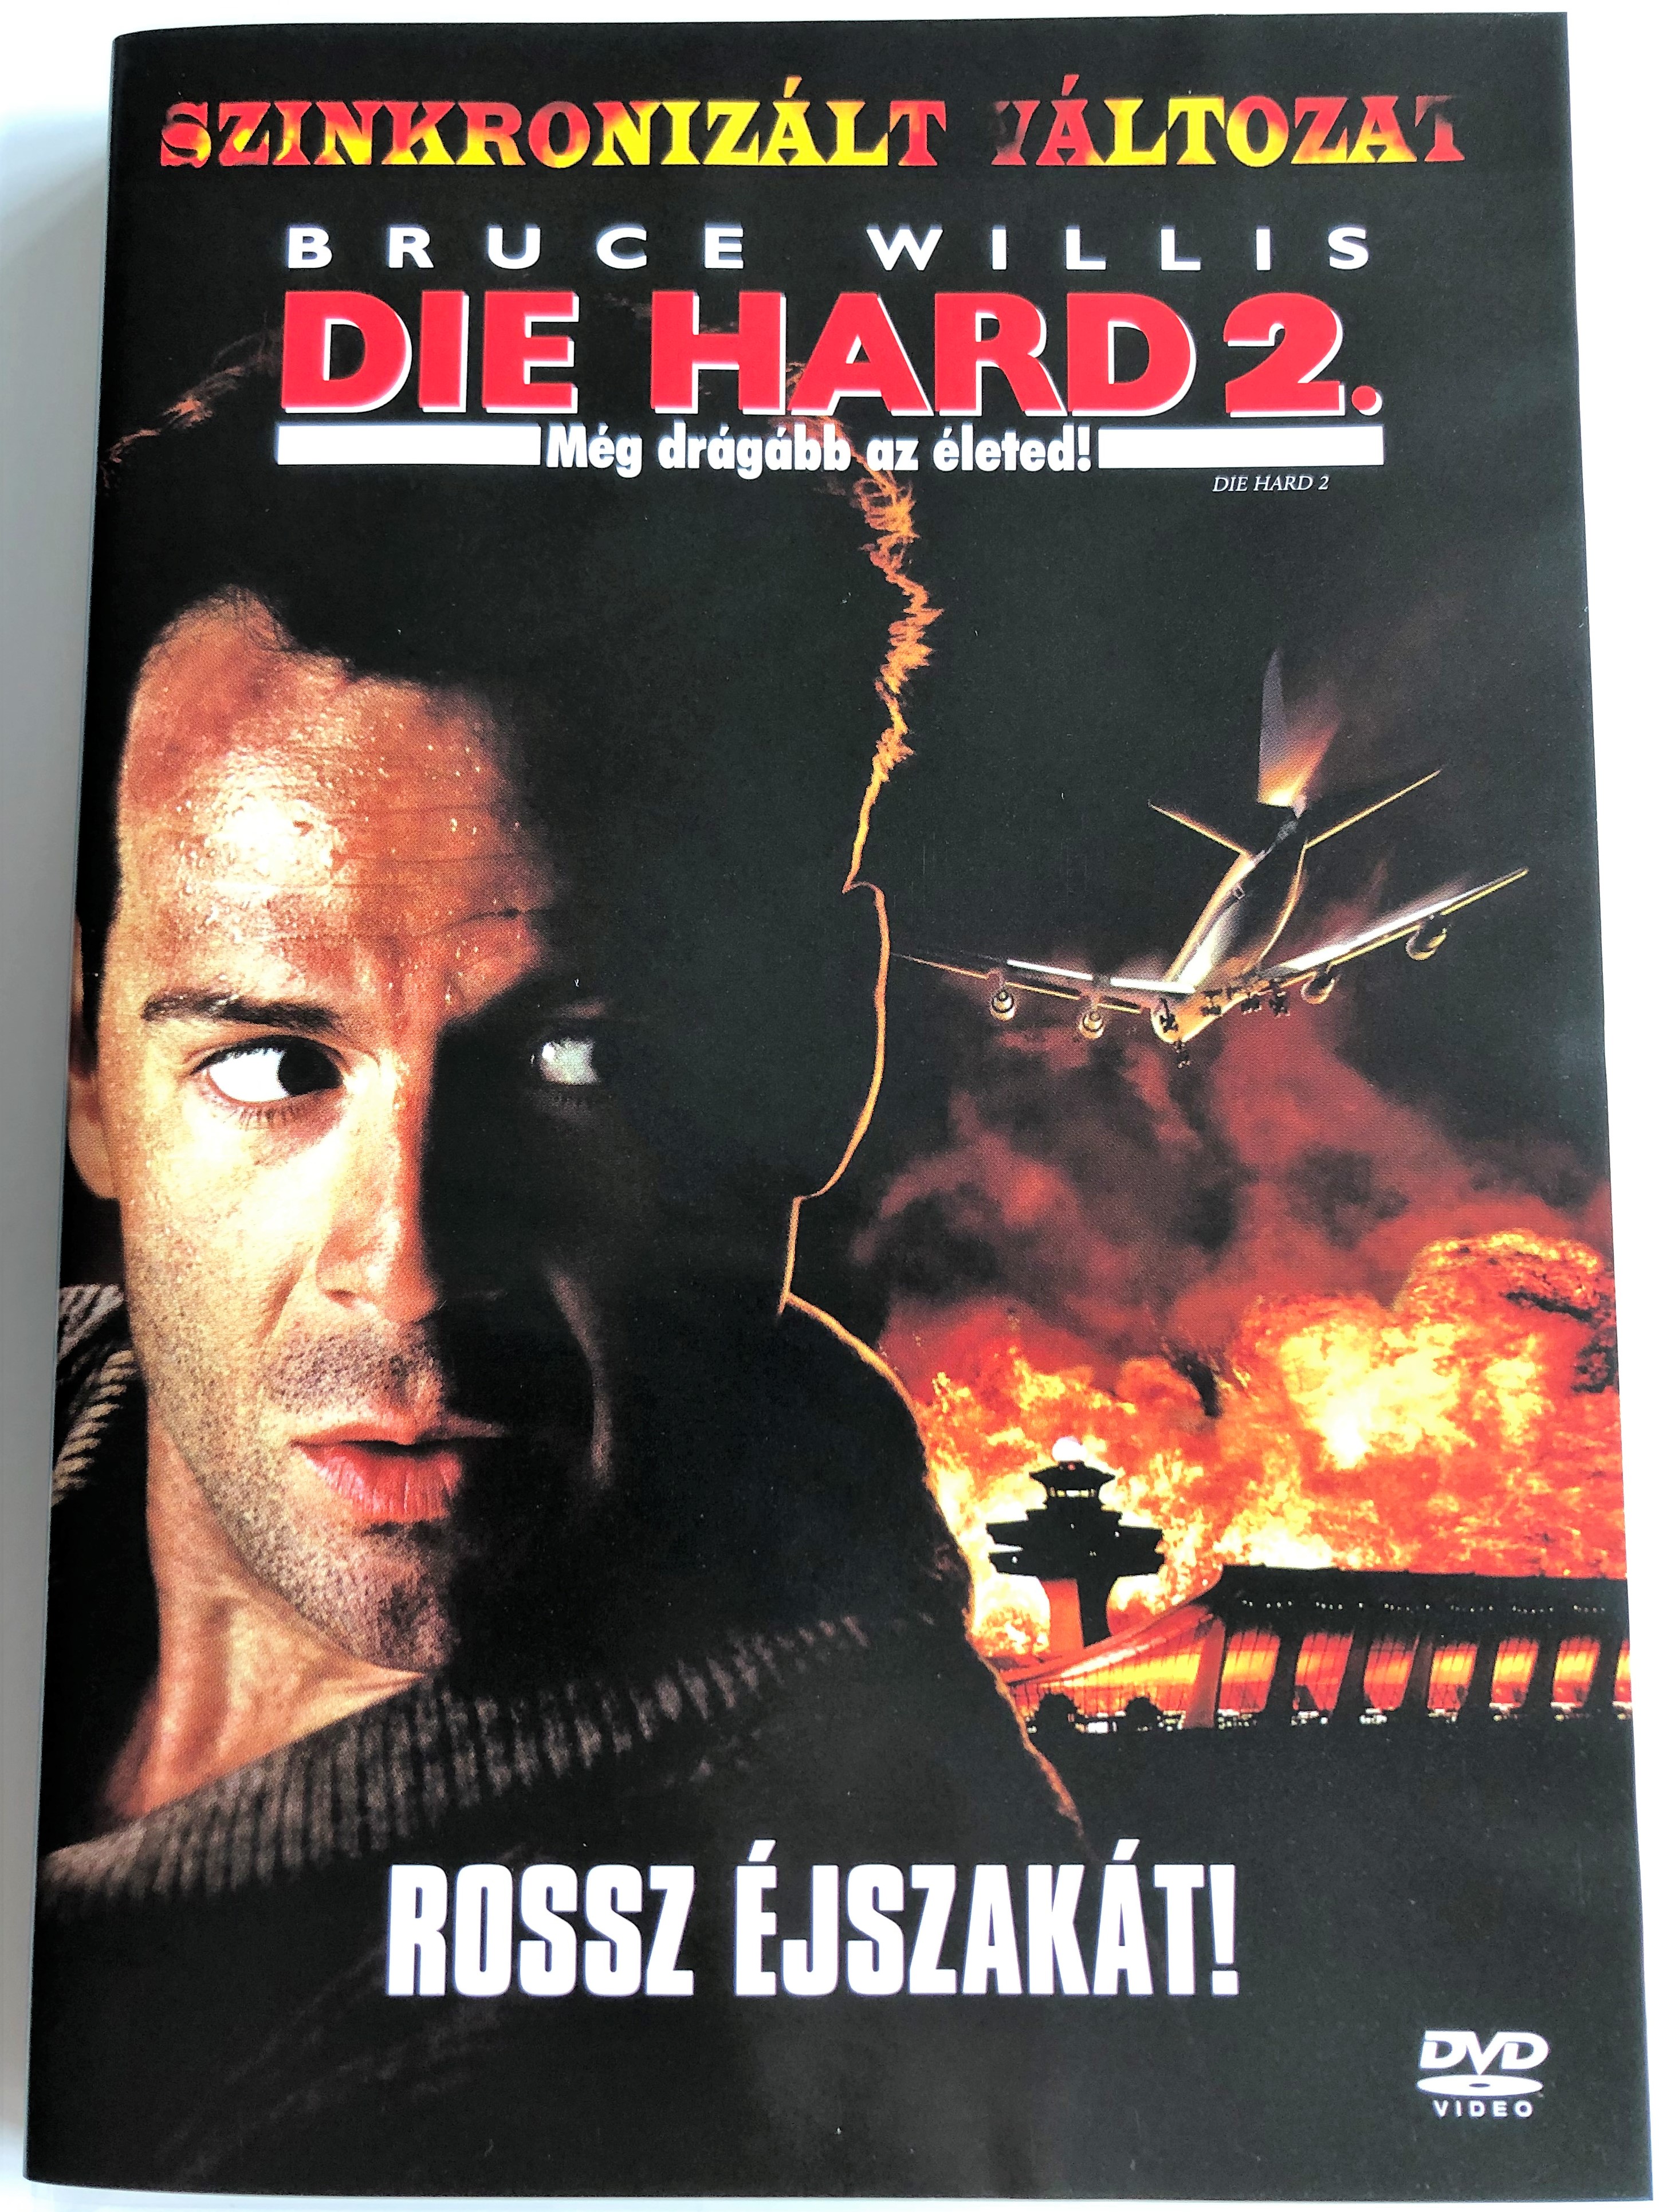 die-hard-2-dvd-1990-m-g-dr-g-bb-az-leted-die-harder-directed-by-renny-harlin-starring-bruce-willis-bonnie-bedelia-william-atherton-reginald-veljohnson-franco-nero-william-sadler-john-amos-1-.jpg